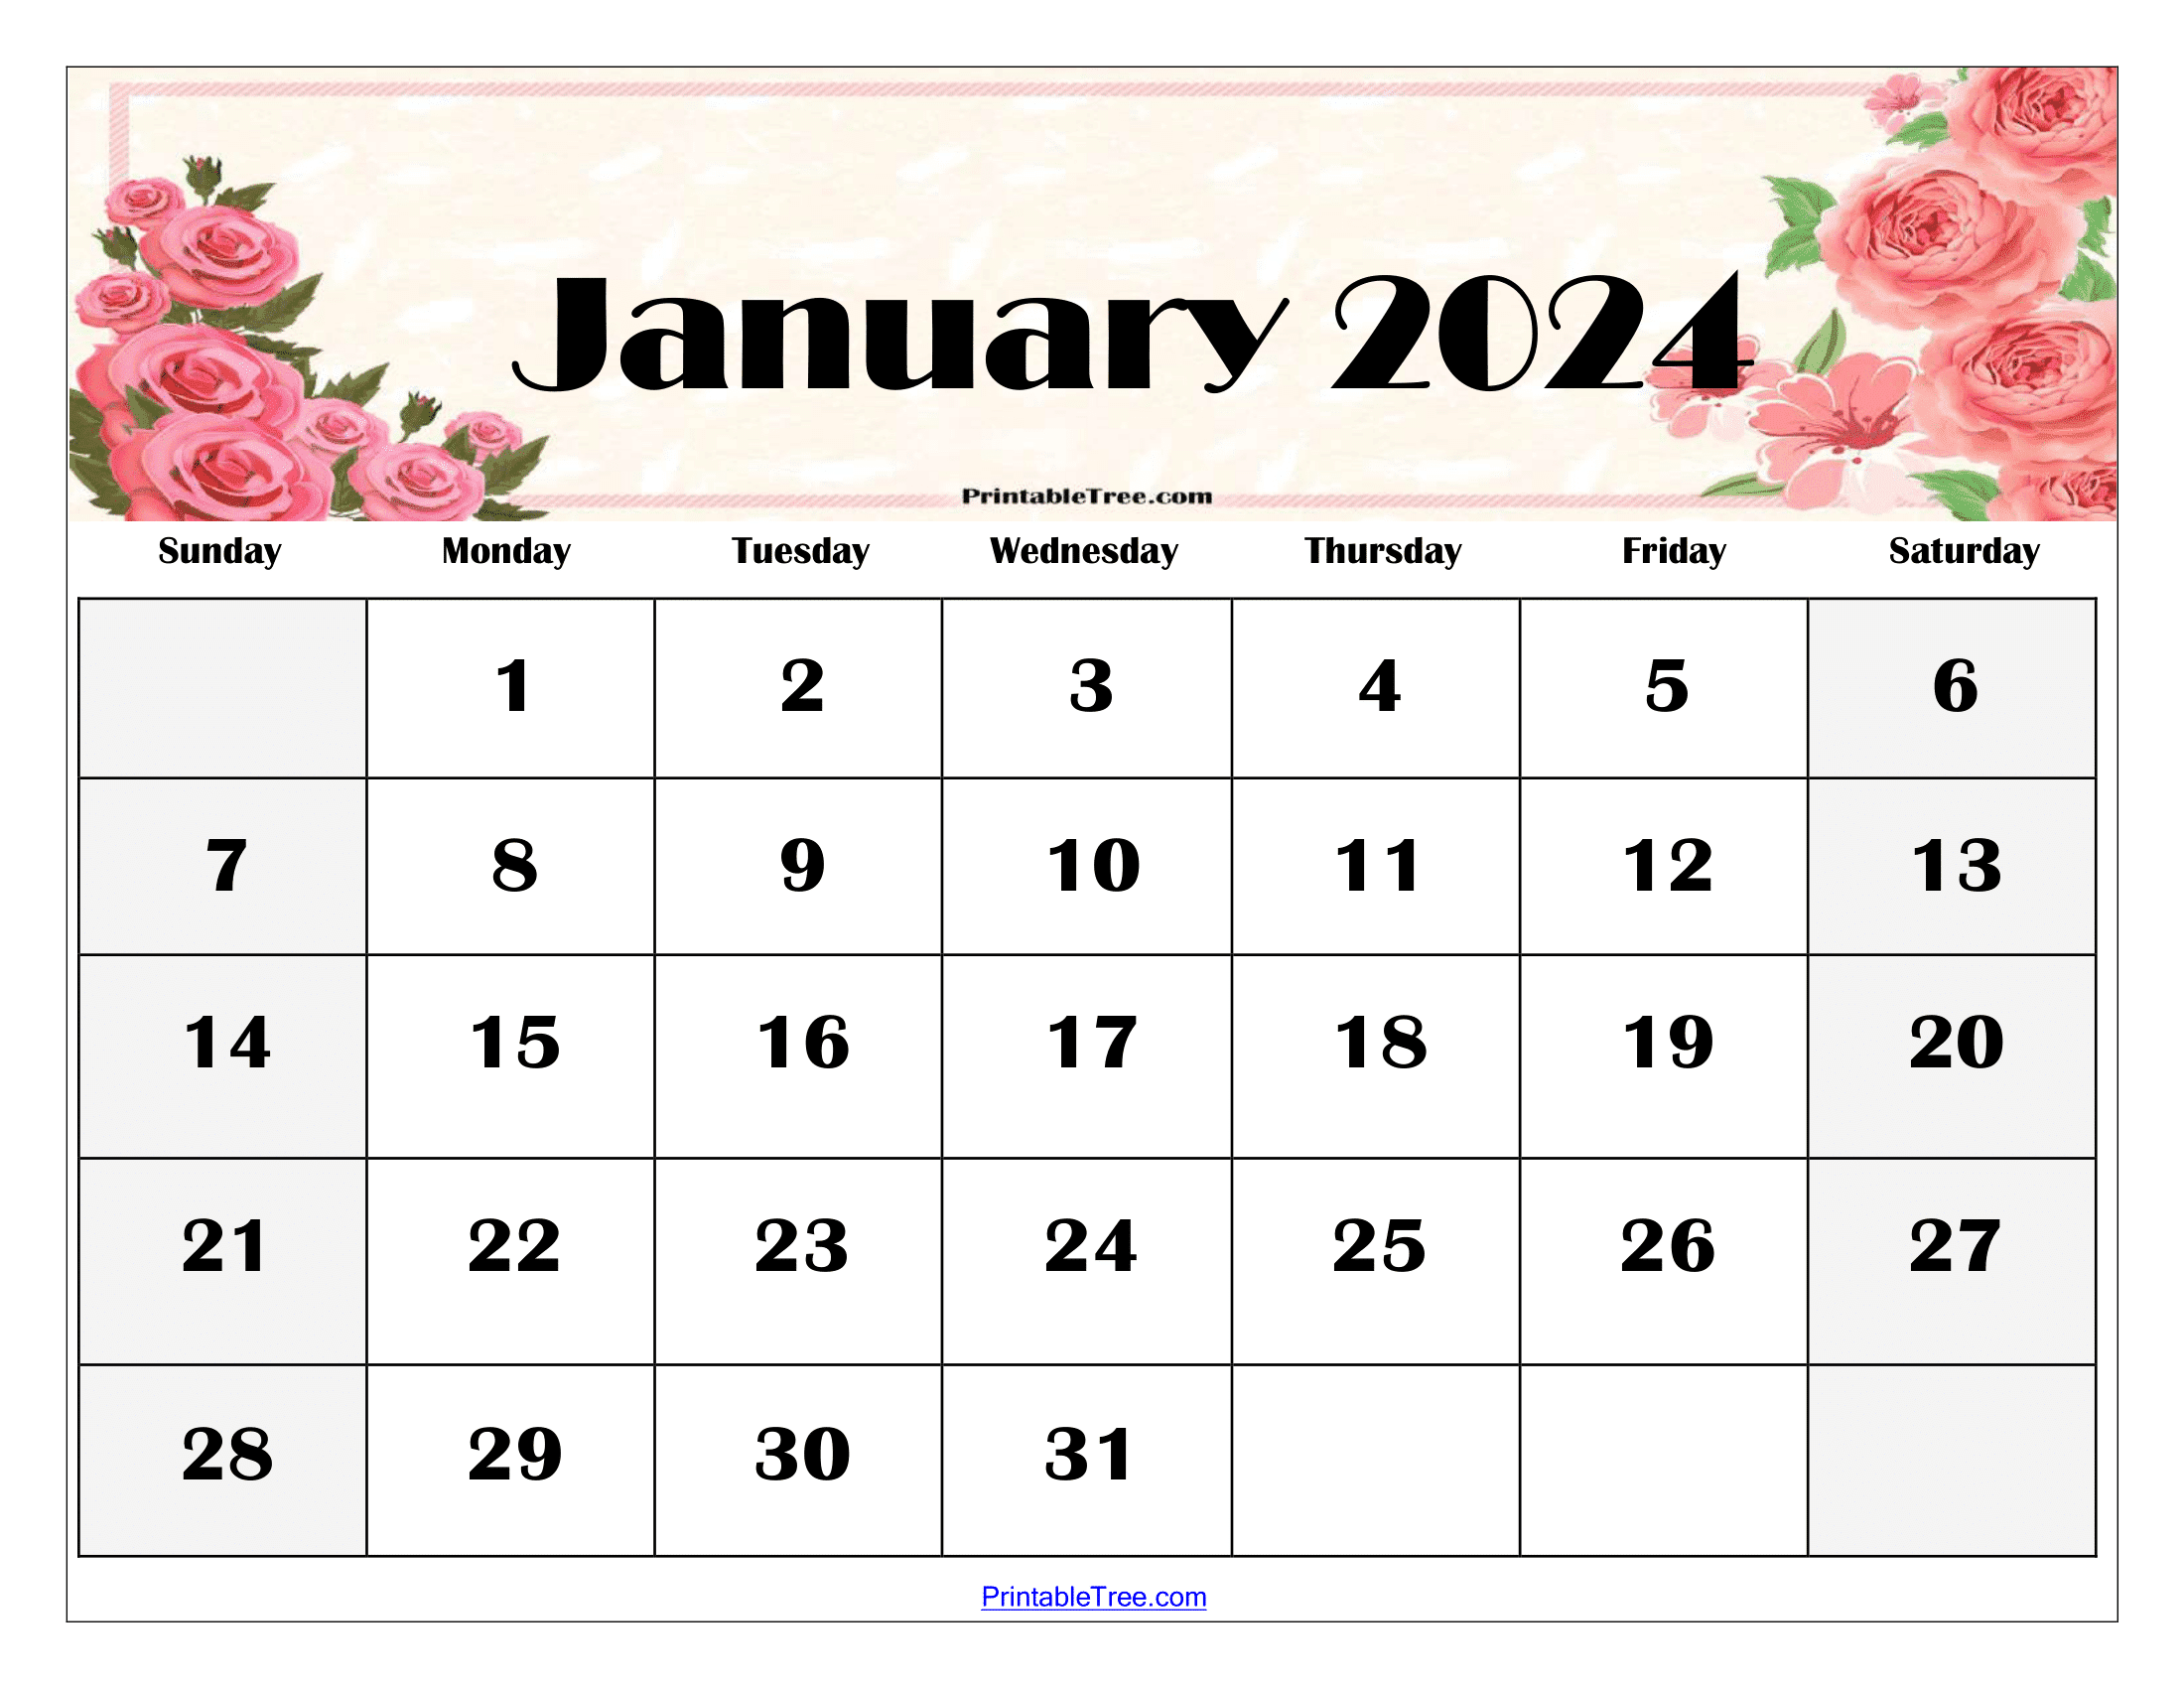 January 2024 Calendar Printable PDF Template With Holidays - Free Printable 2024 January Calendar With Holidays